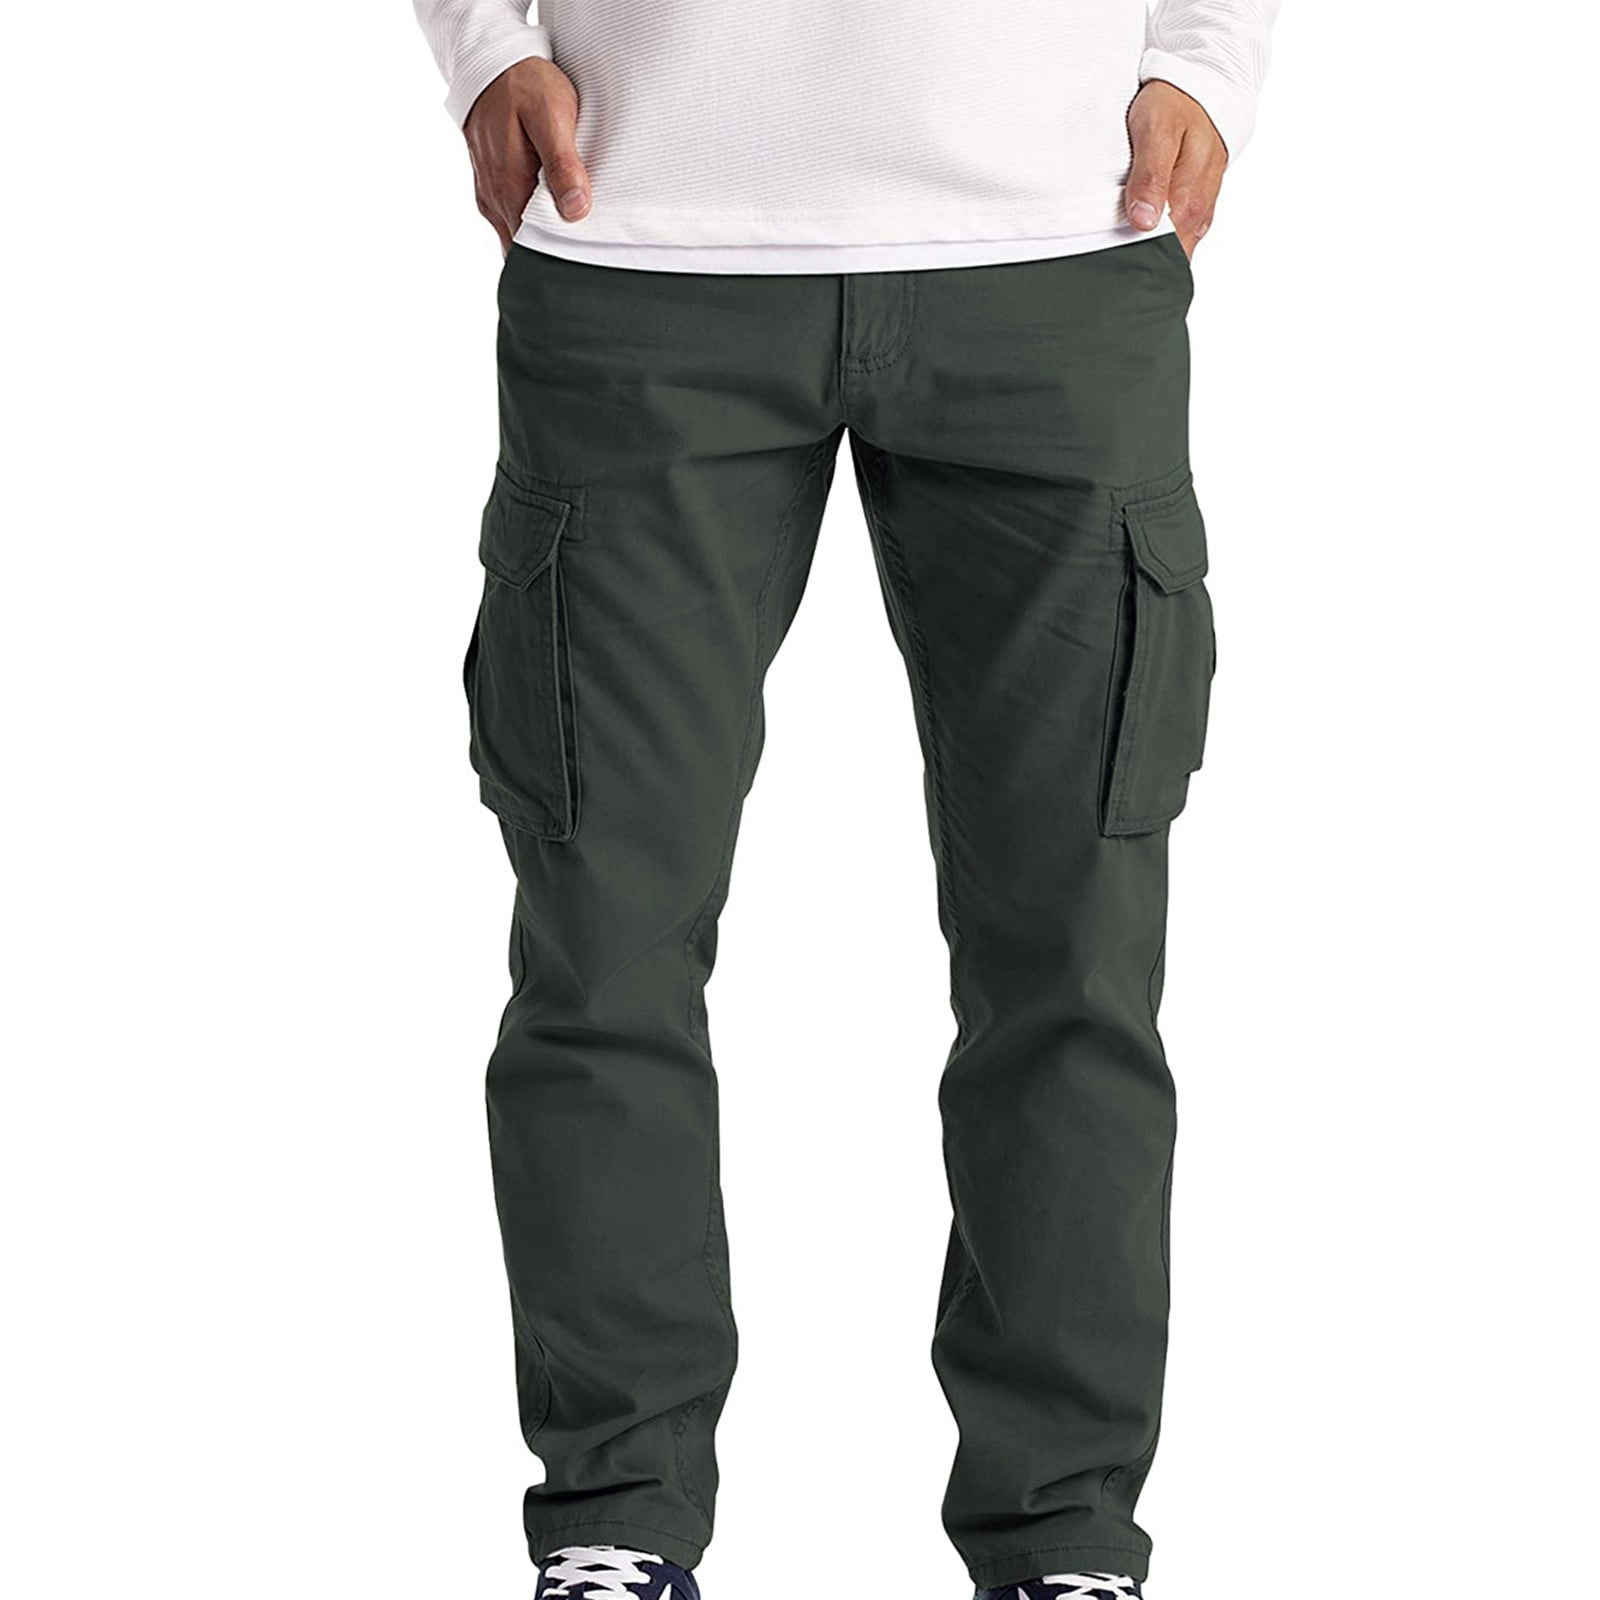 FRXSWW Cargo Pants for Men Camouflage Outdoor Wear Work Trousers